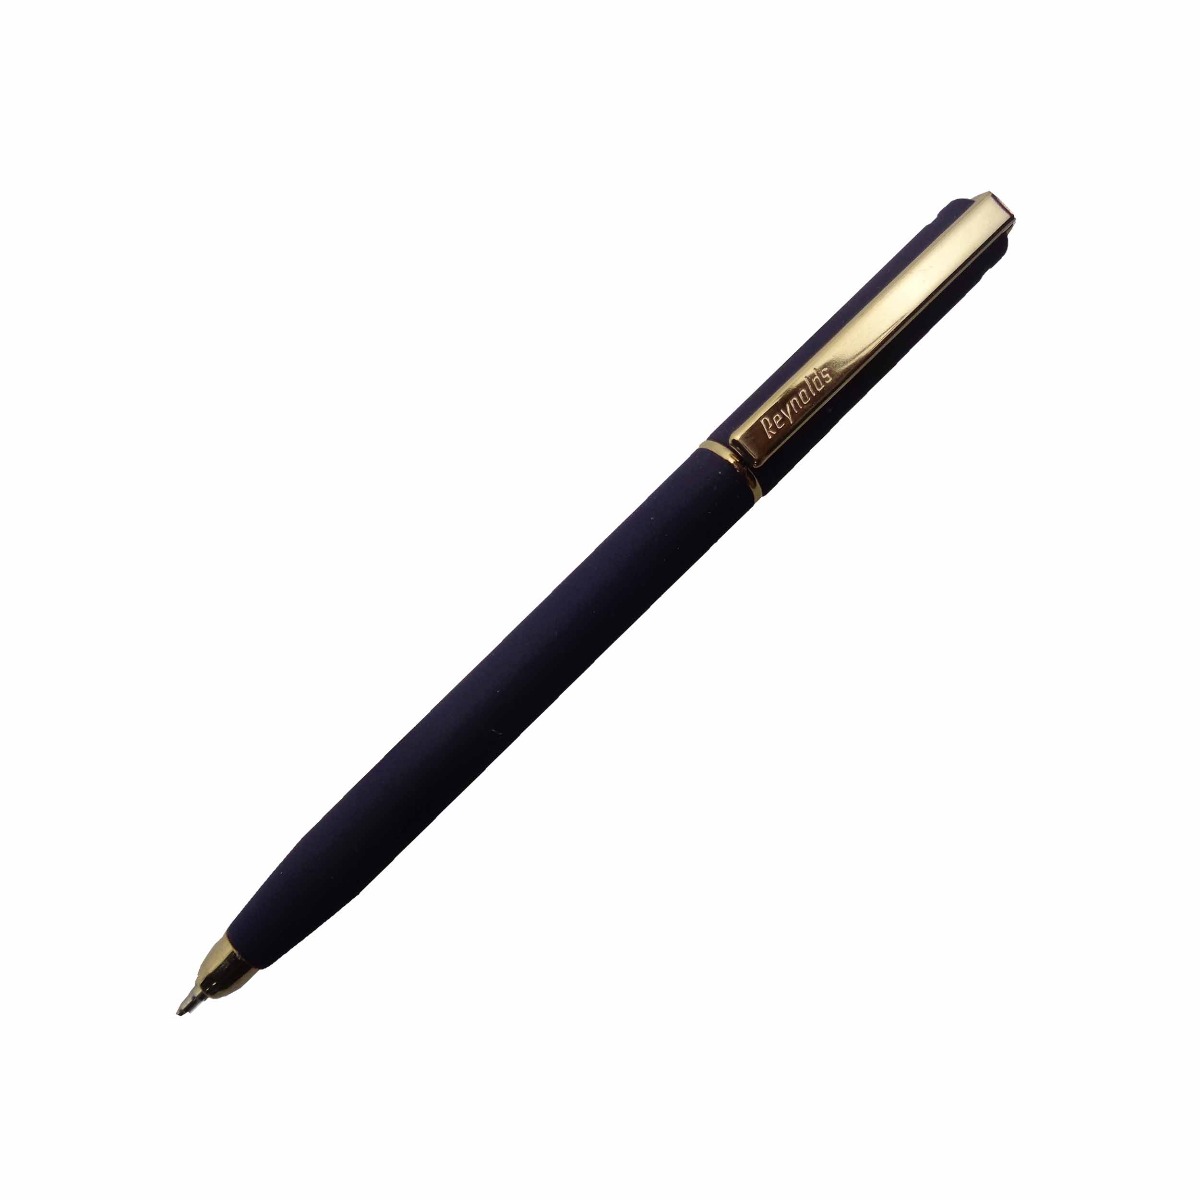 Reynolds Model 15339 Aerosoft gold Blue color body with golden clip fine tip retractable ball pen